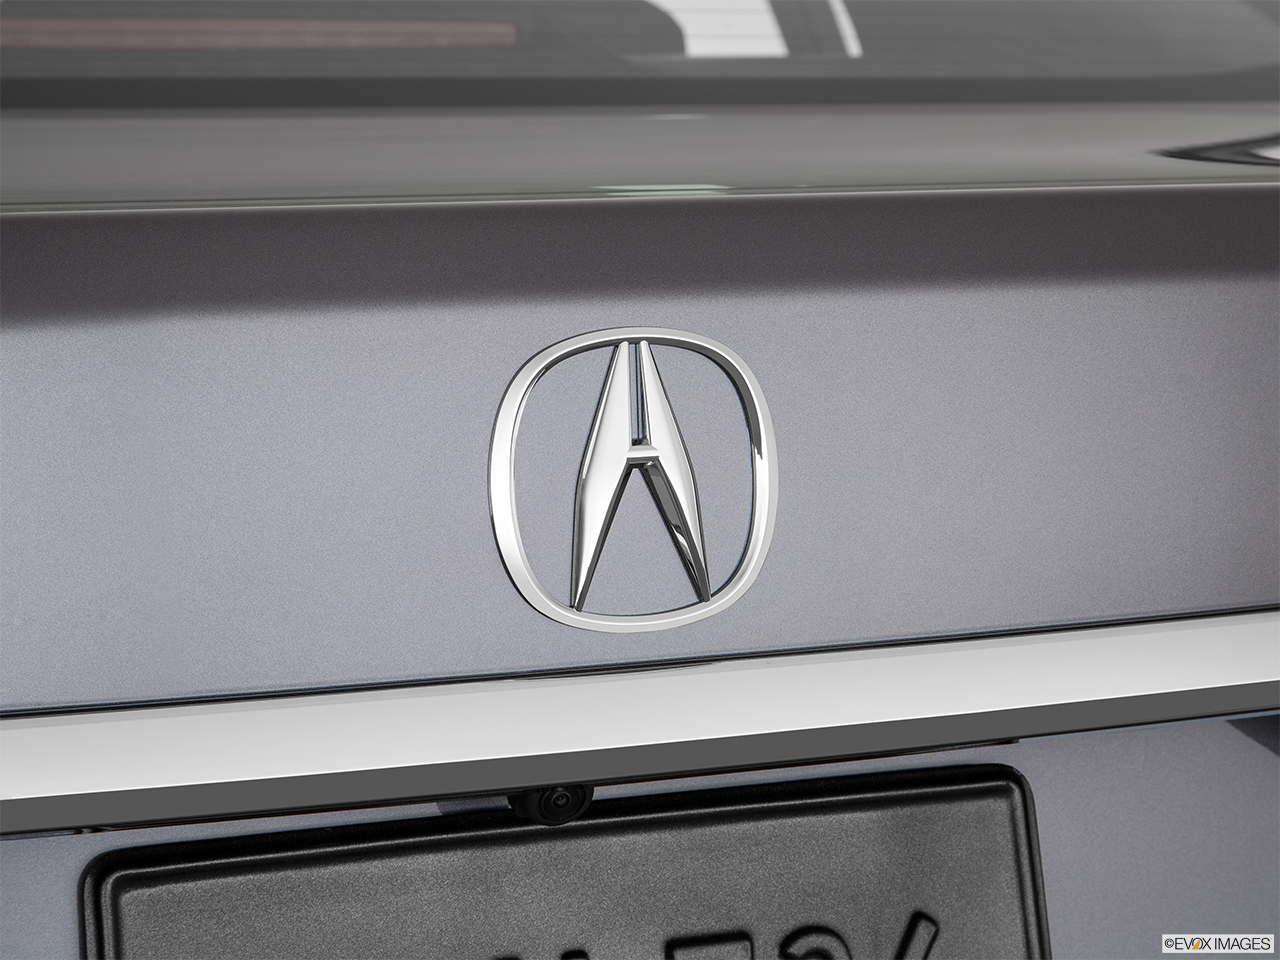 2020 Acura RLX Sport Hybrid SH-AWD Rear manufacture badge/emblem 